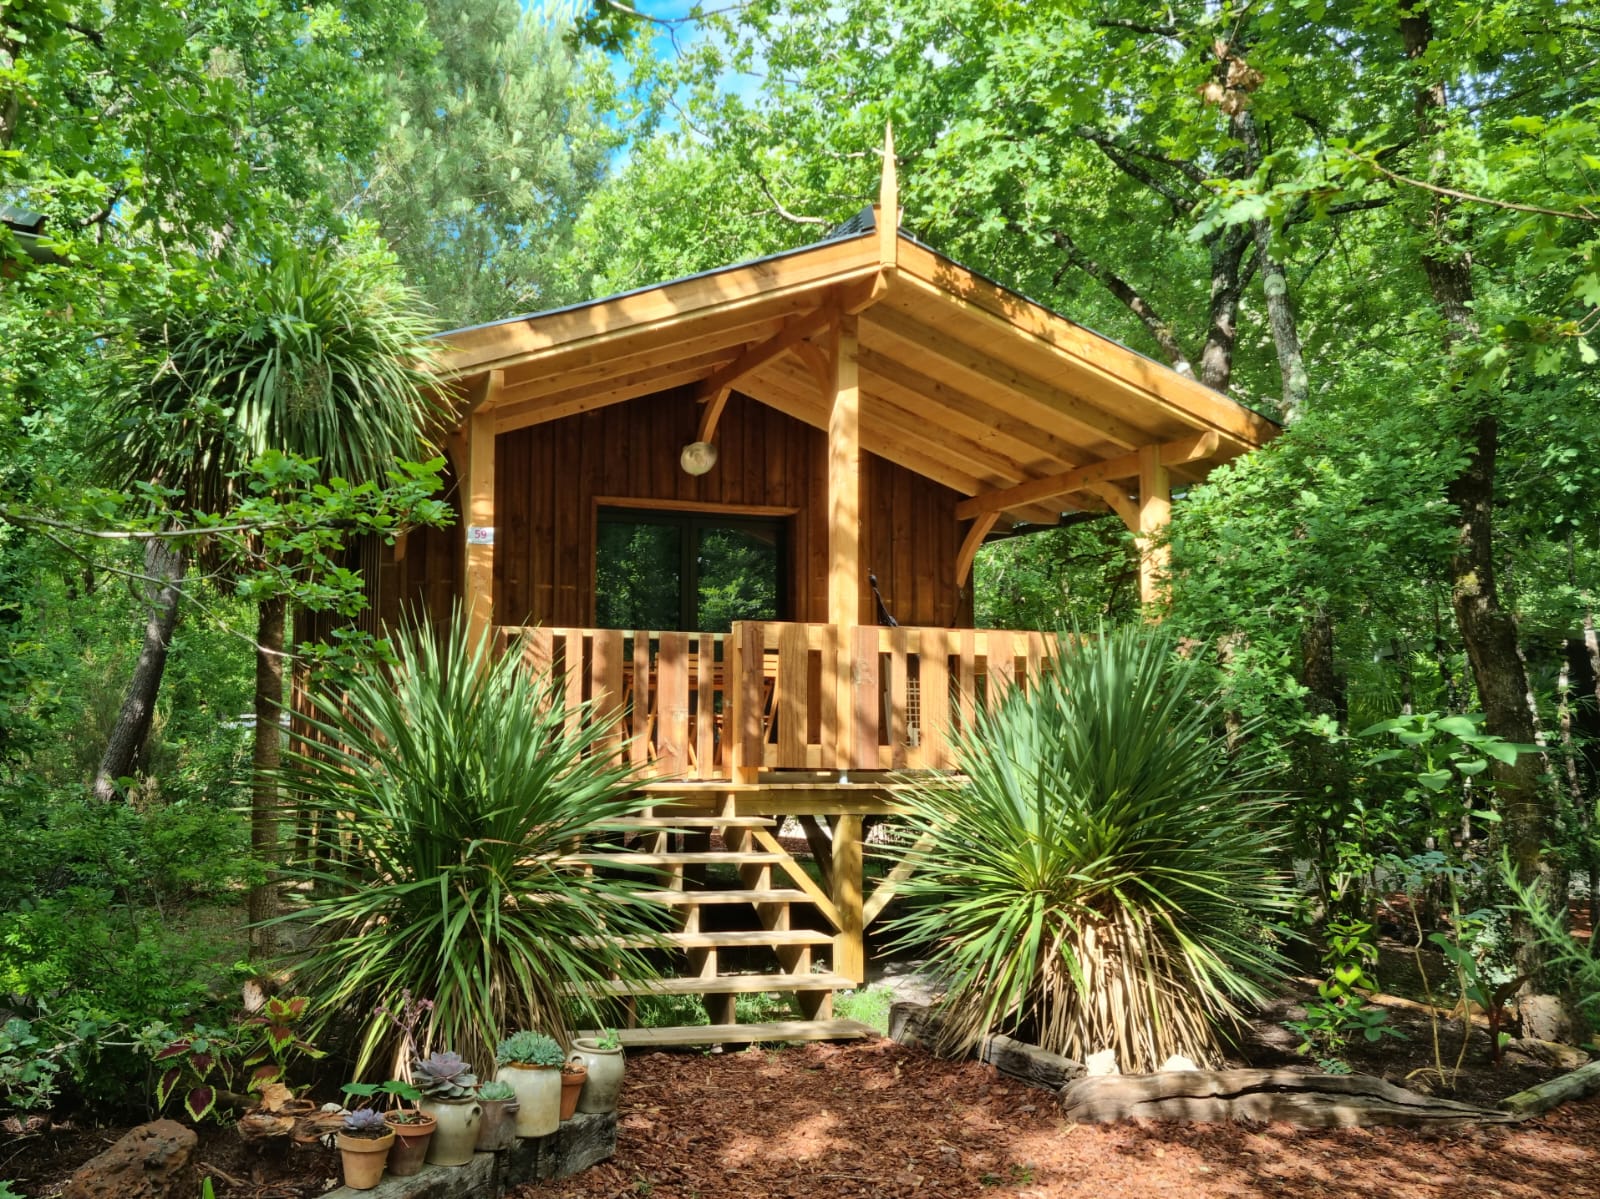  wood cabin tchanquée